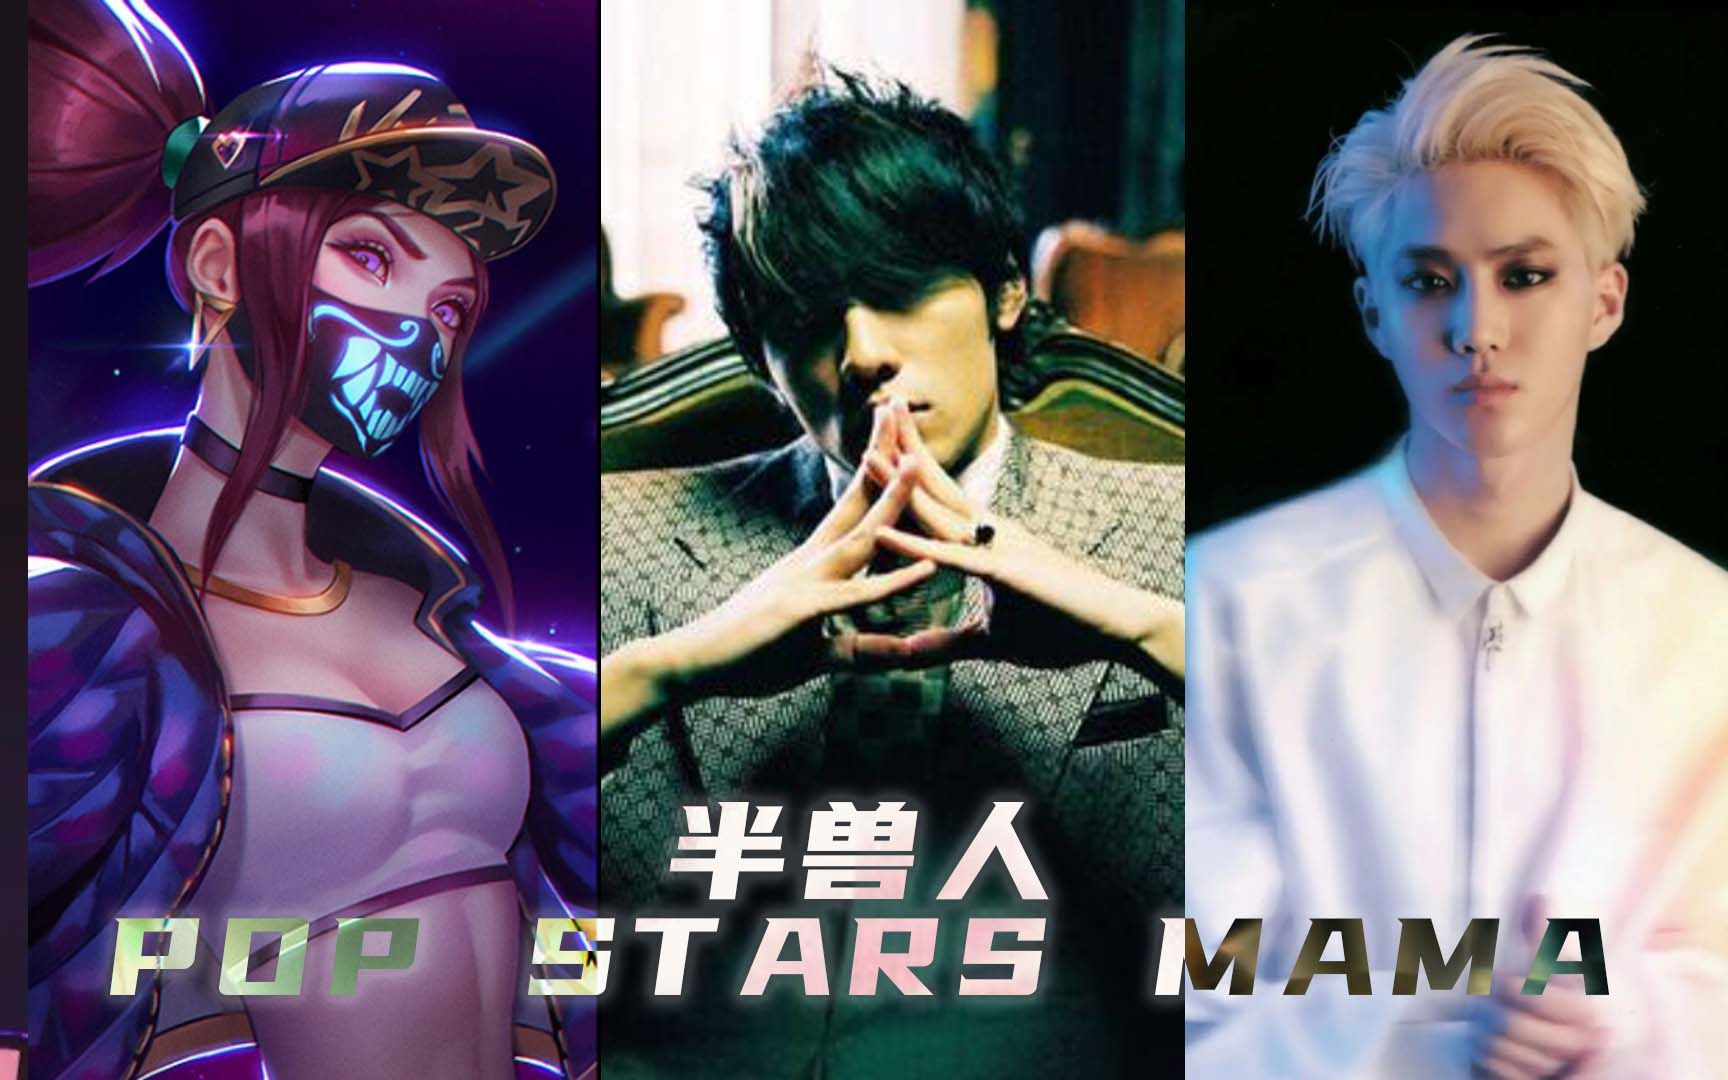 【周杰伦/EXO/KDA】半兽人 x POP STARS x MAMA【Mashup】